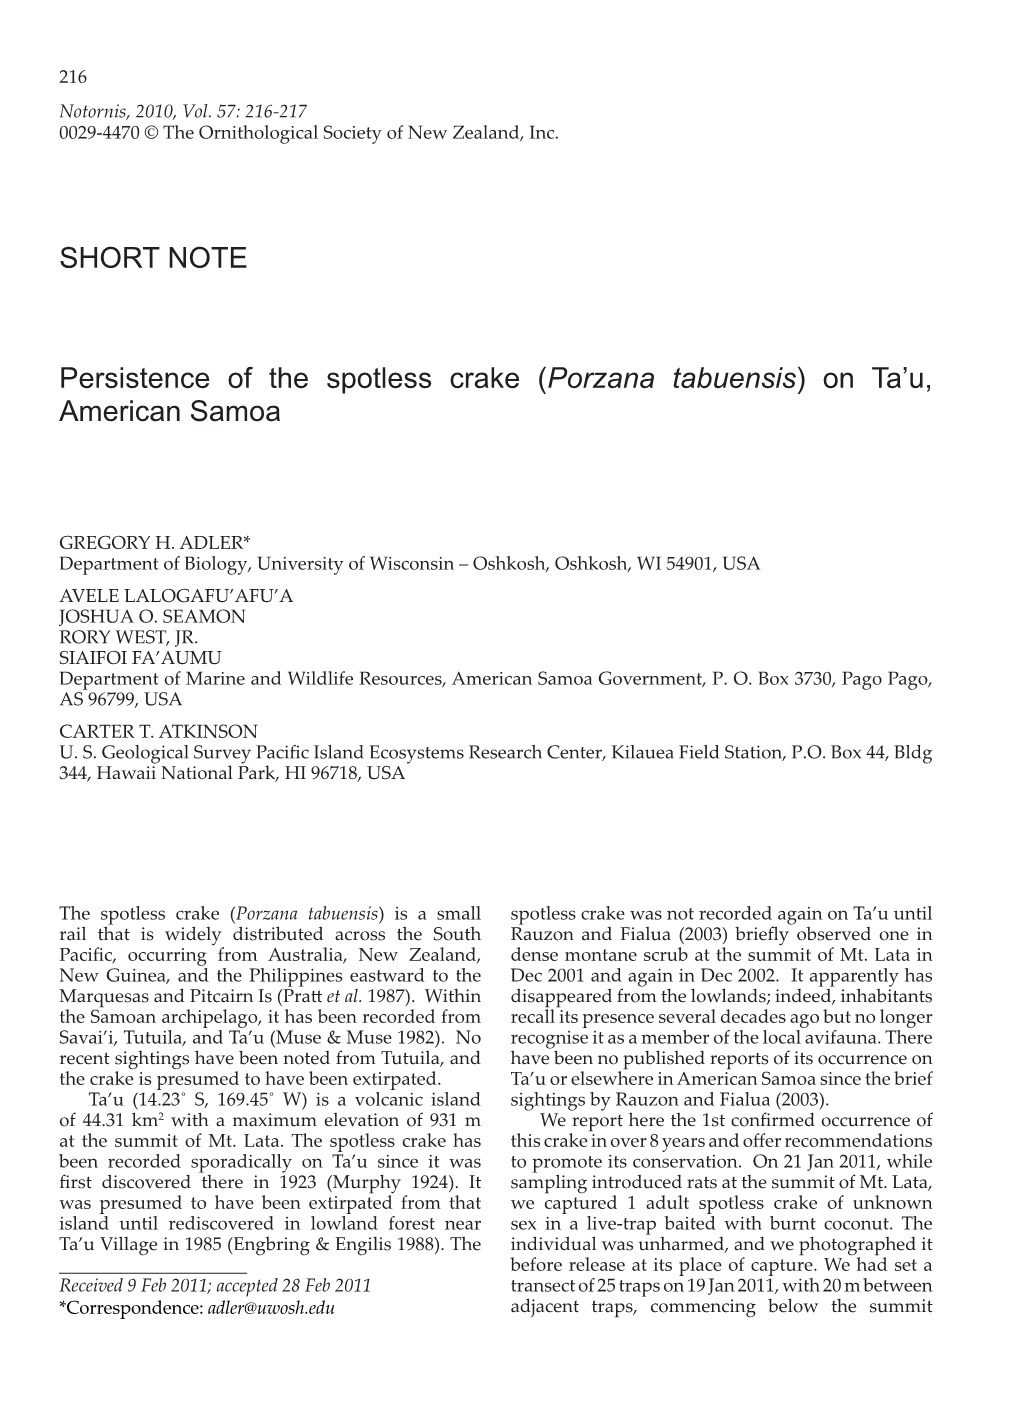 Persistence of the Spotless Crake (Porzana Tabuensis) on Ta’U, American Samoa